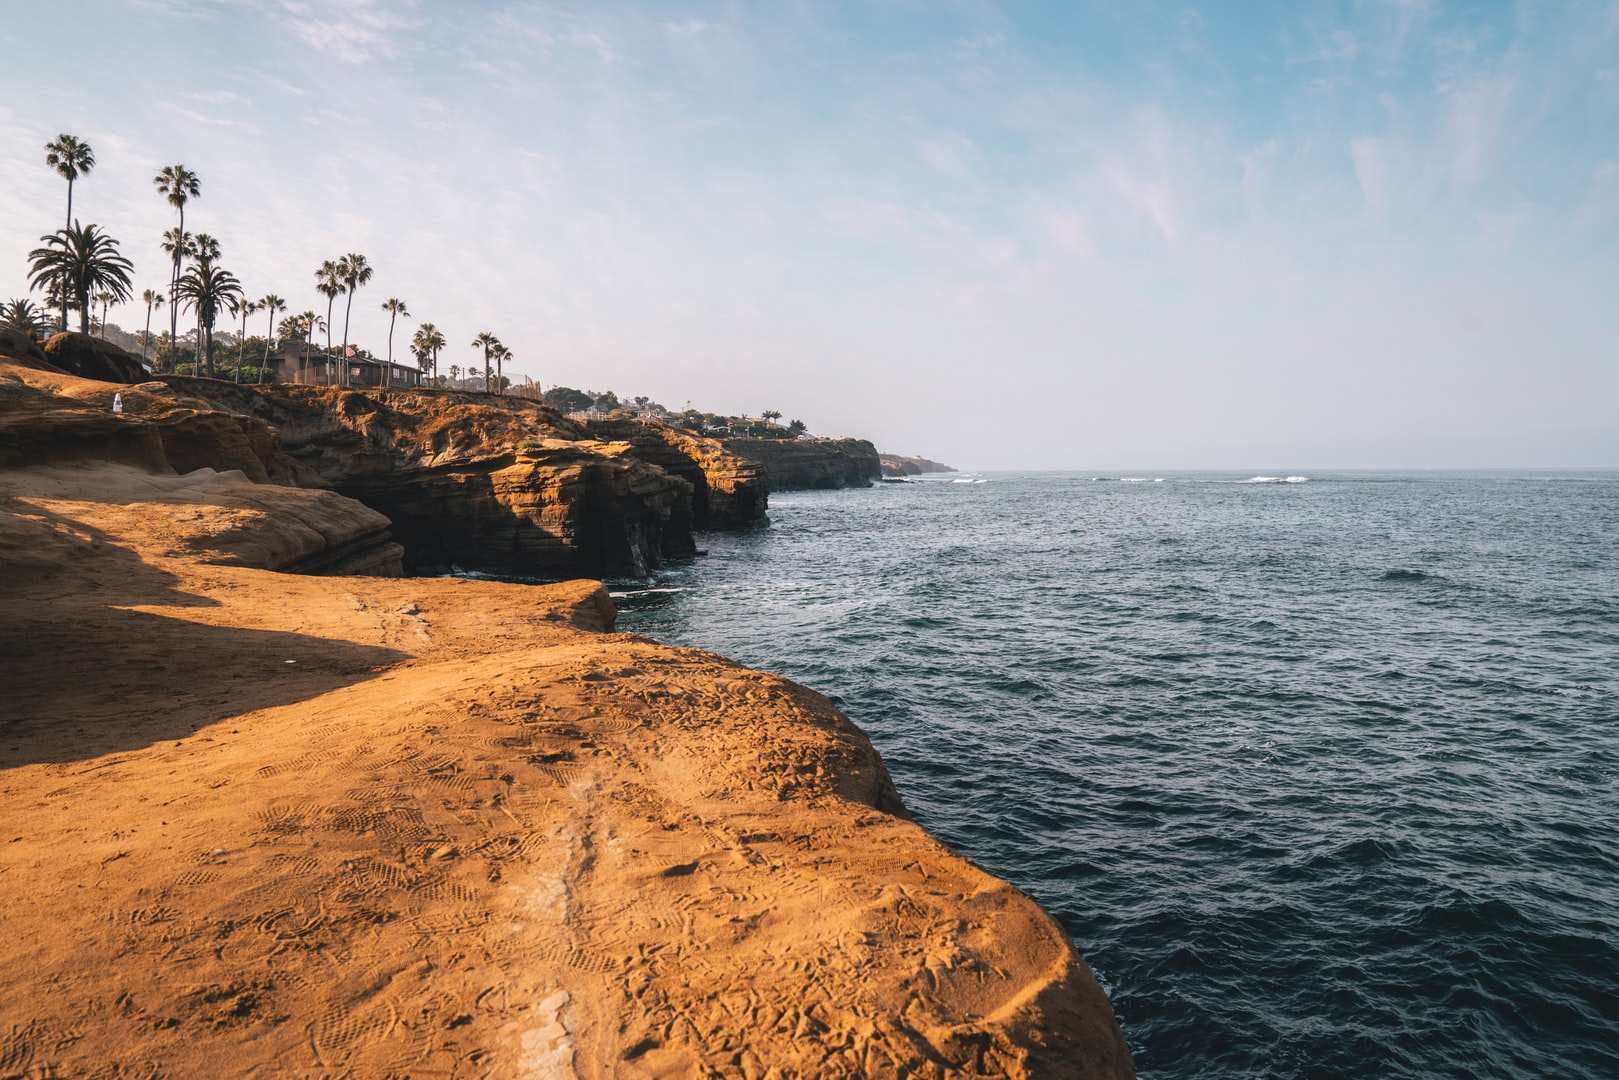 Ocean View along the San Diego Coastline